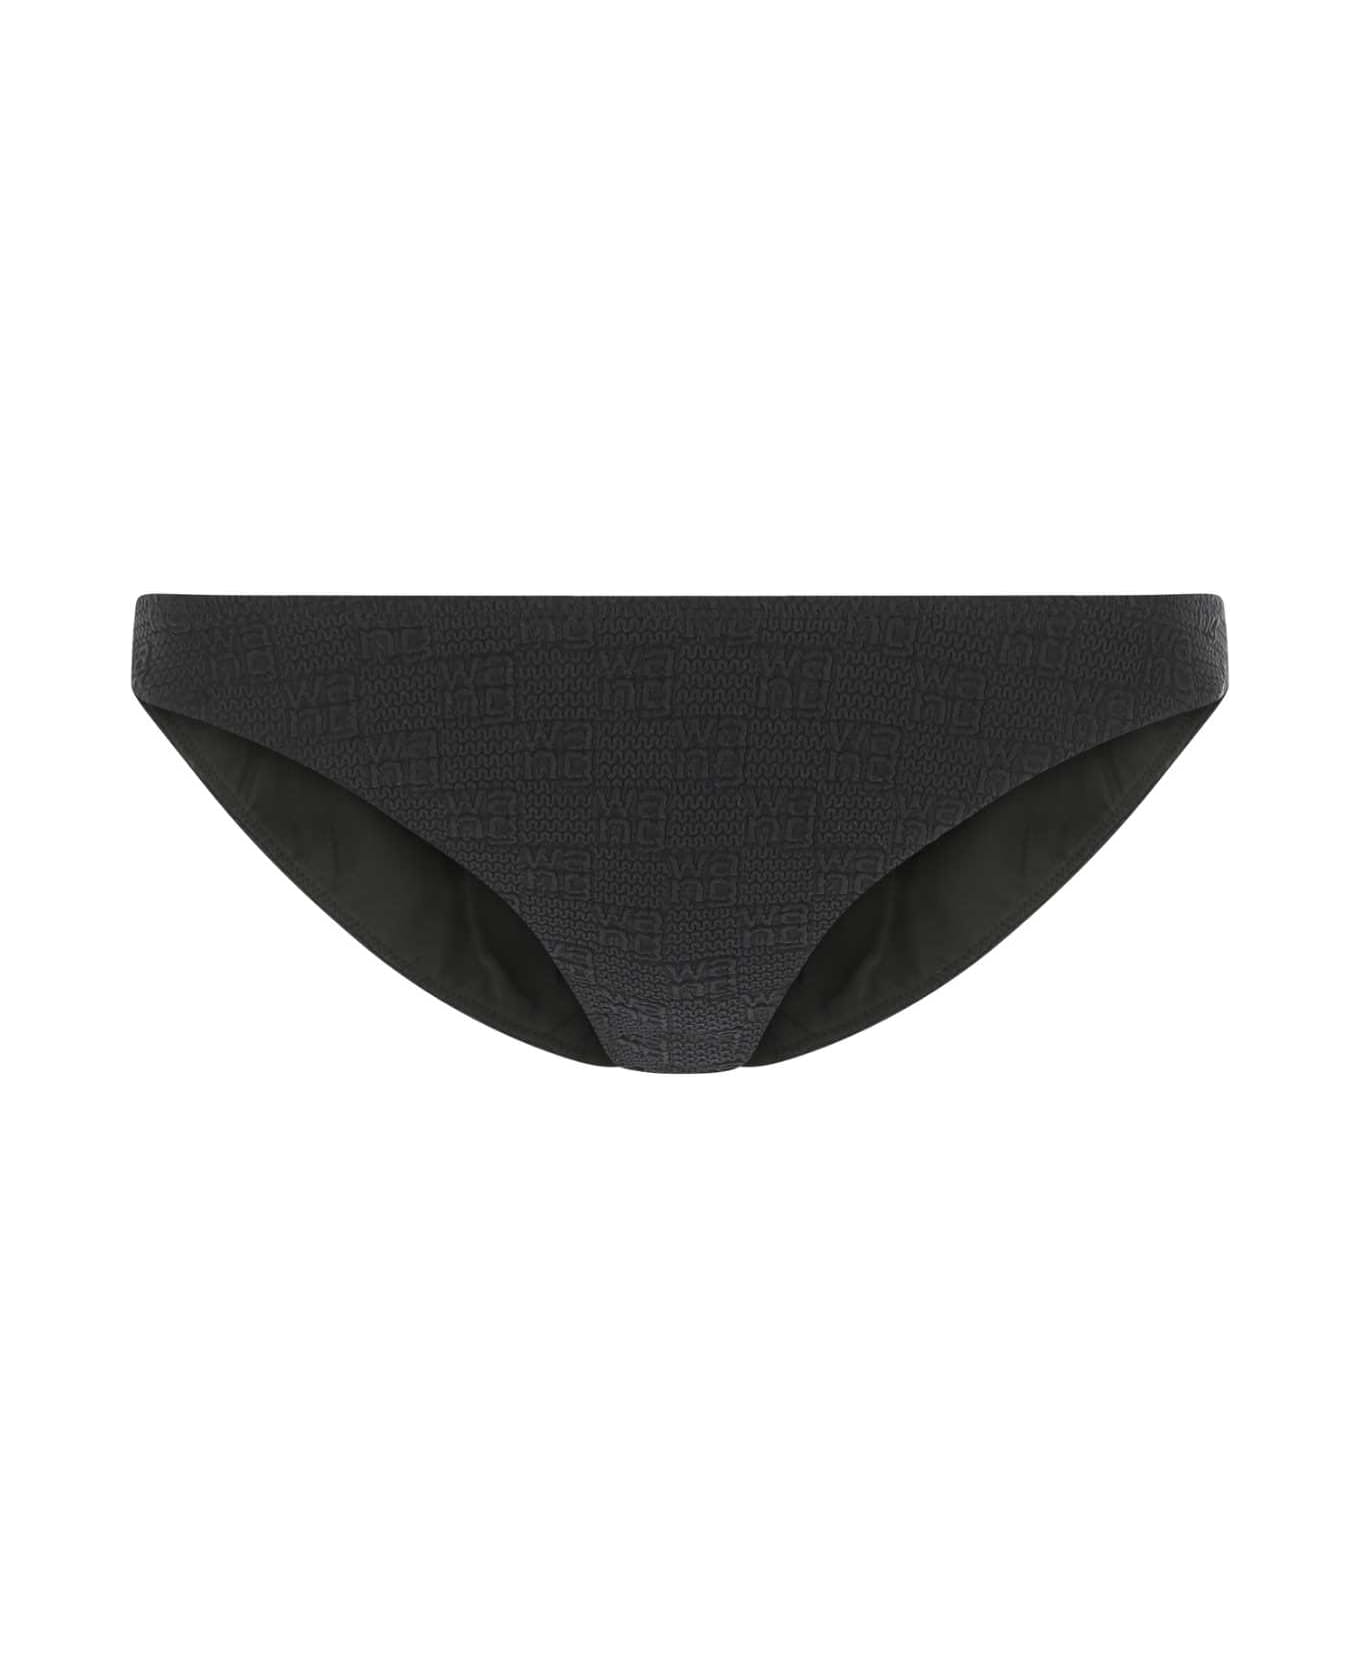 Alexander Wang Black Stretch Nylon Bikini Bottom - 001